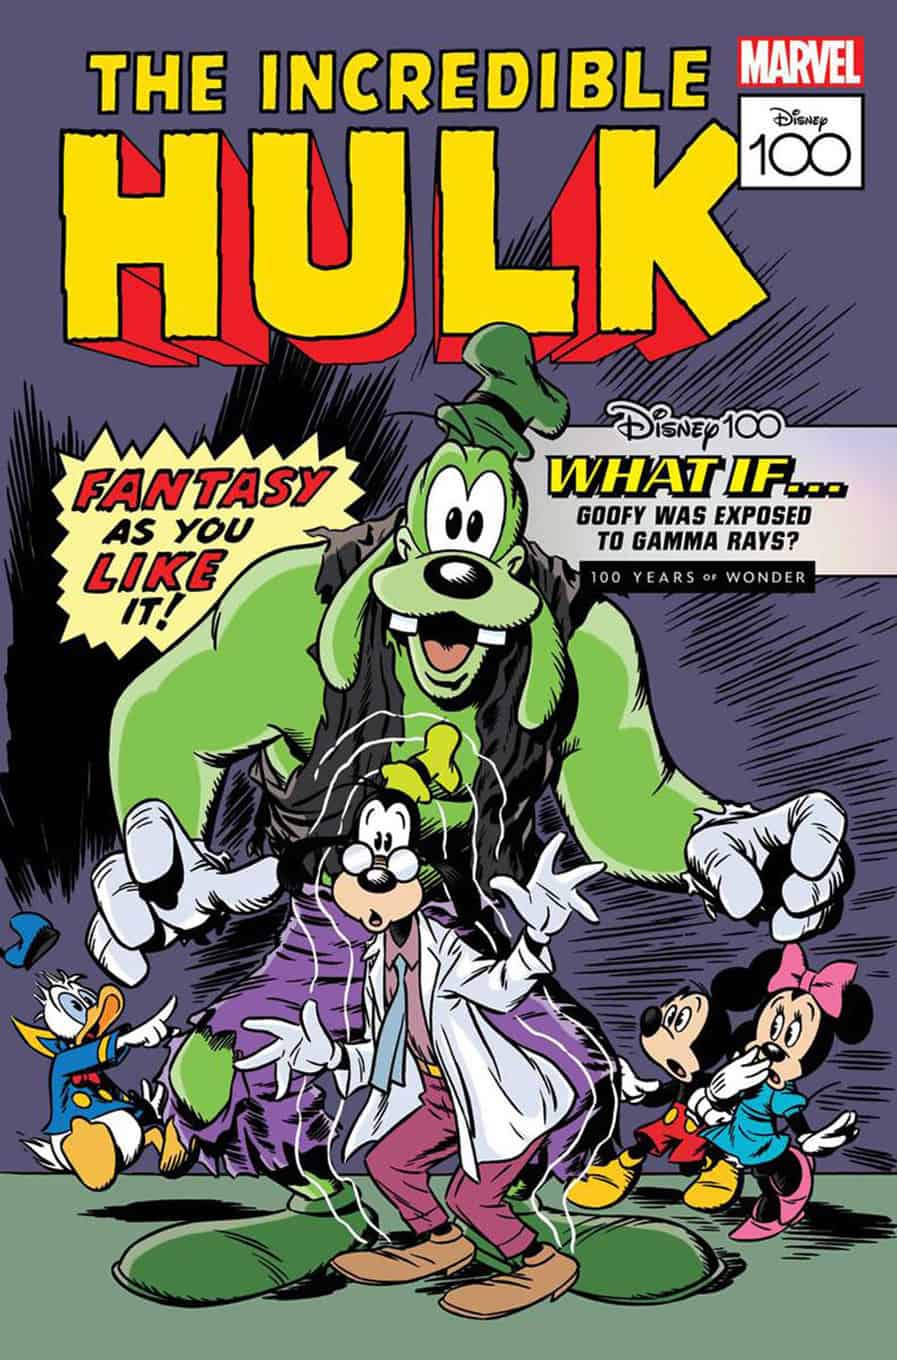 Amazing Spider-Man #21 spoilers 0-3 Vitale Mangiatordi Disney100 Hulk Cover